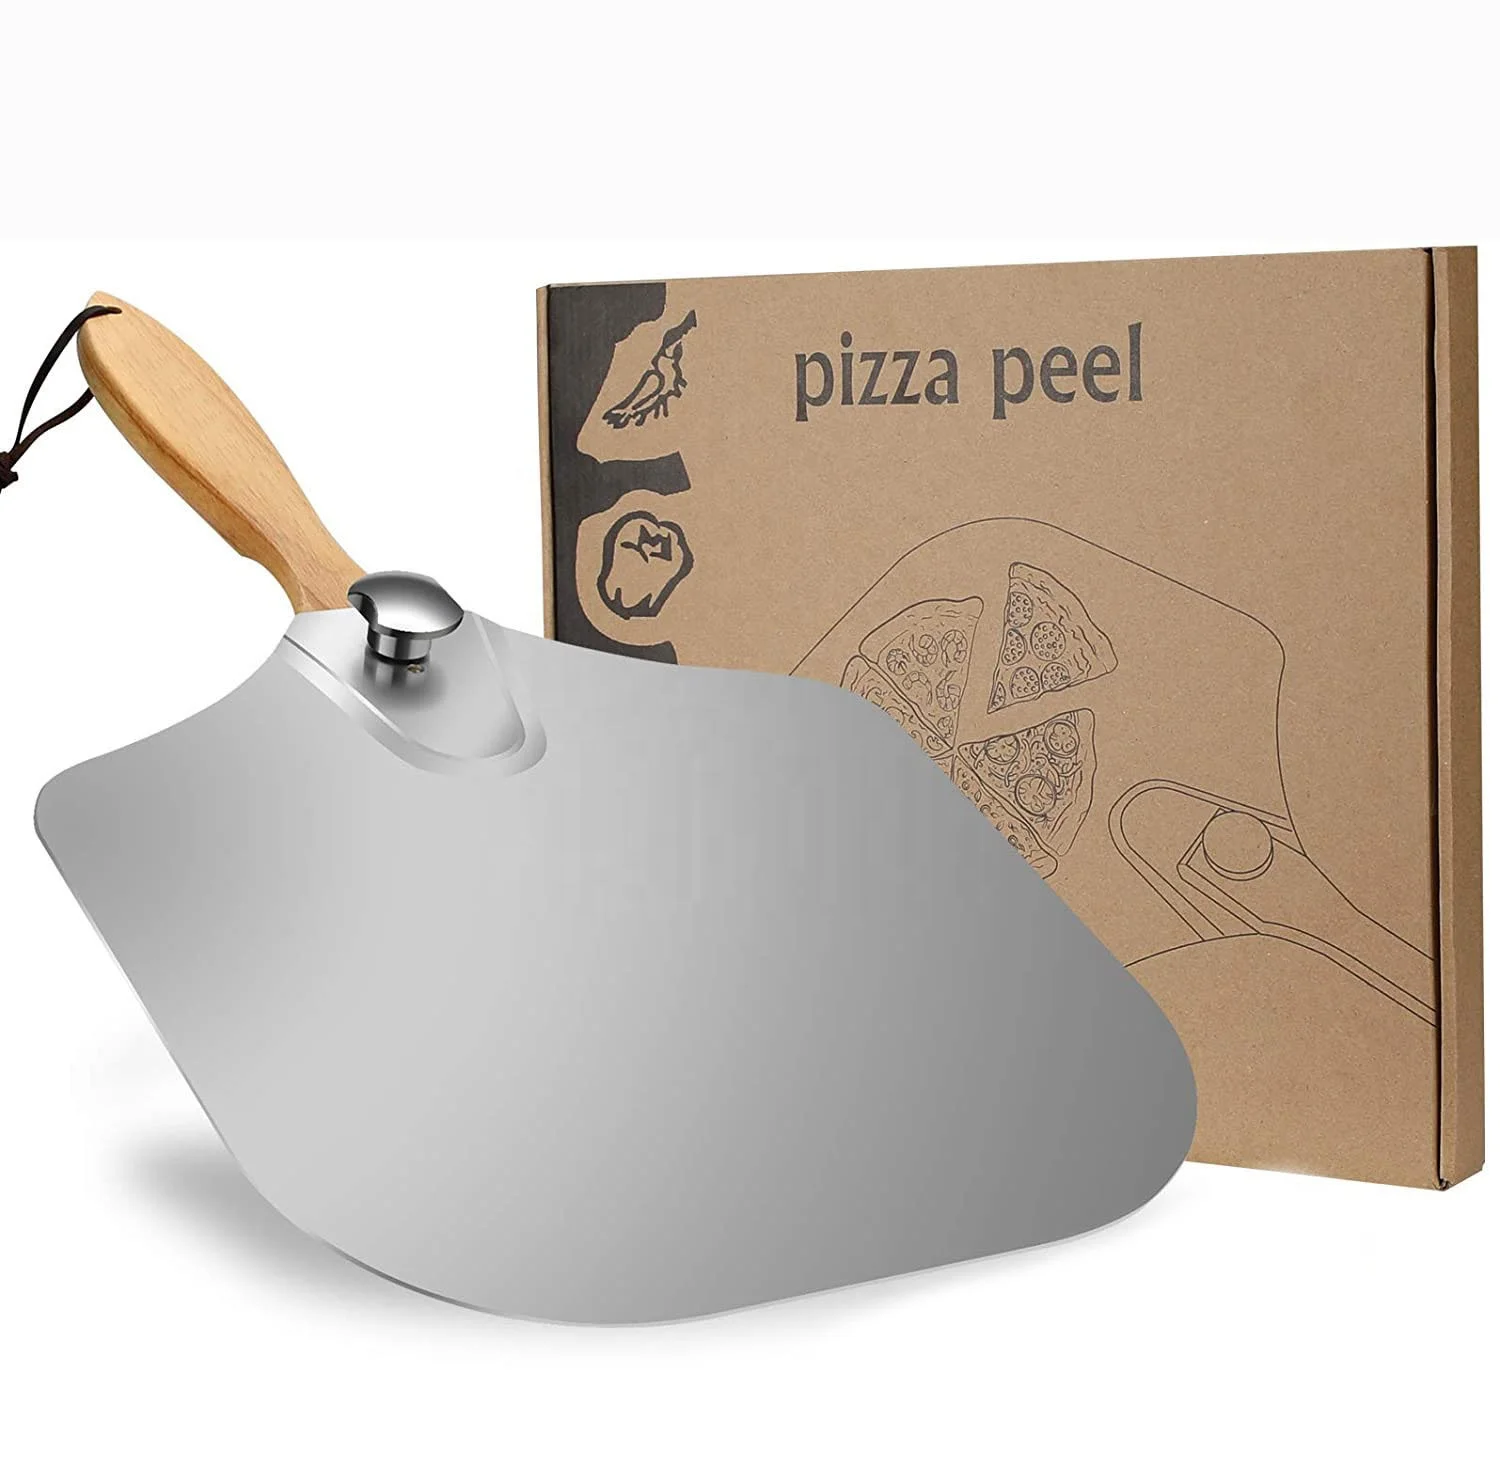 
Premium 12 x 14 Inch Foldable Rubber Wood Handle Aluminum Paddle Metal Pizza Peel Shovel  (1600183001727)